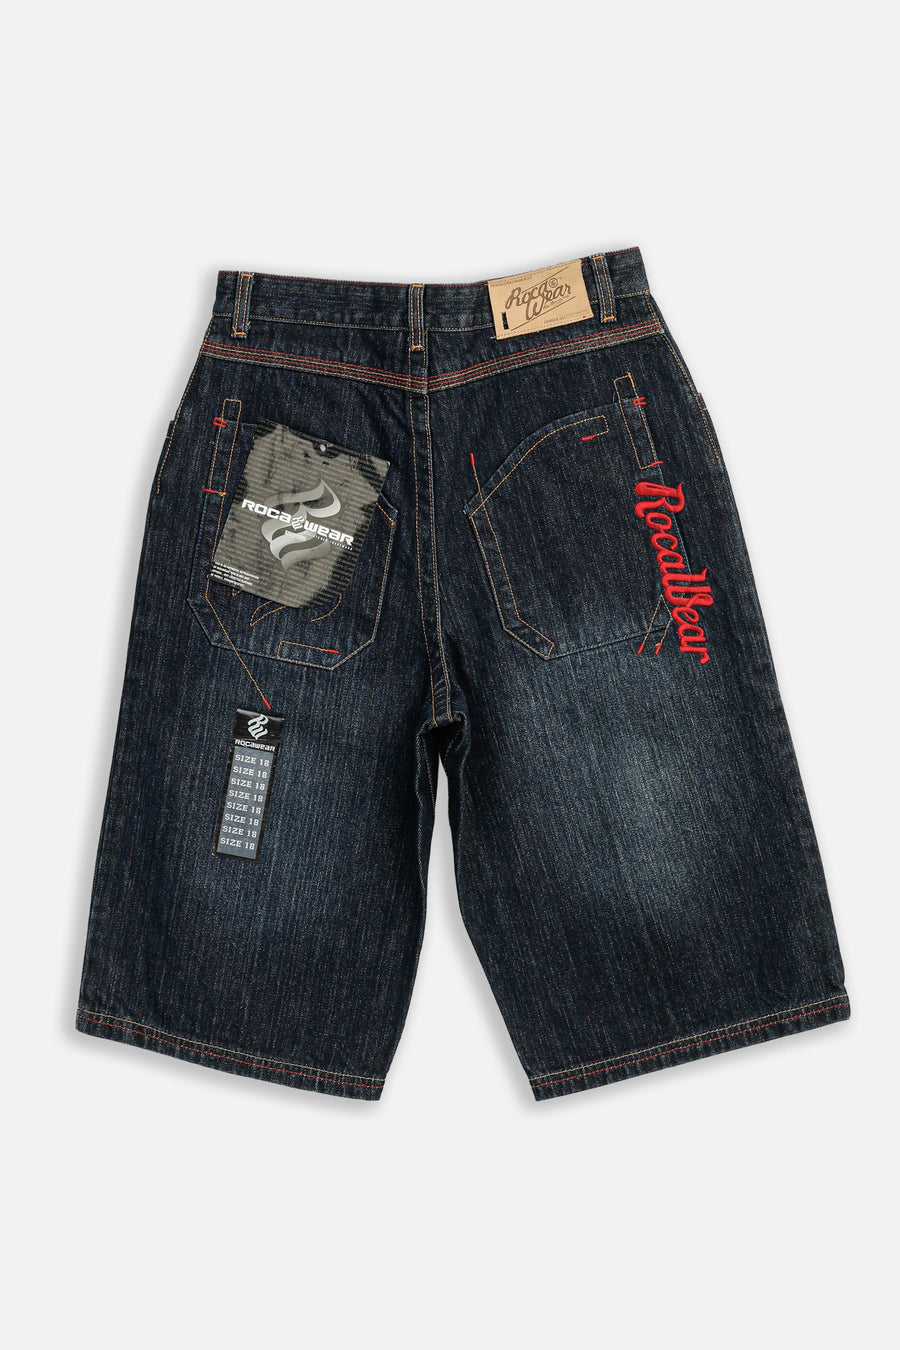 Vintage Rocawear Denim Shorts - W28